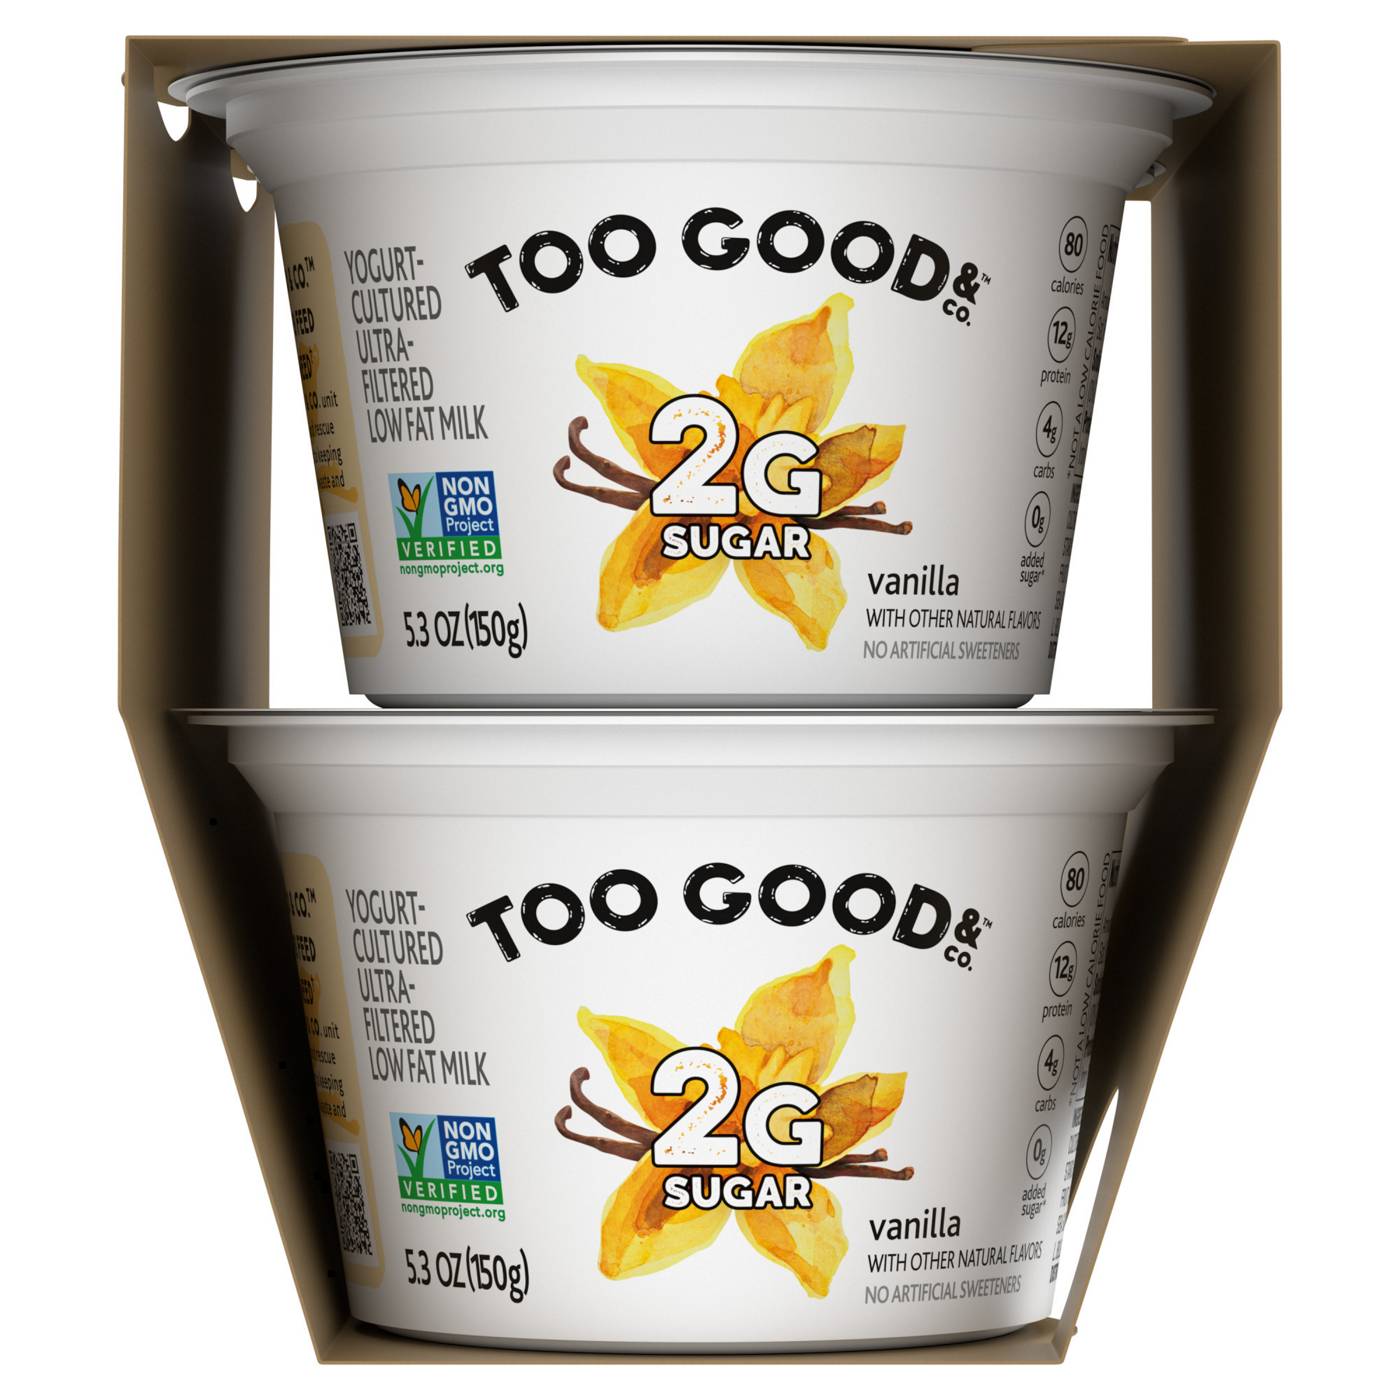 Too Good & Co. Vanilla Flavored Lower Sugar, Low Fat Greek Yogurt Cultured Product; image 2 of 2